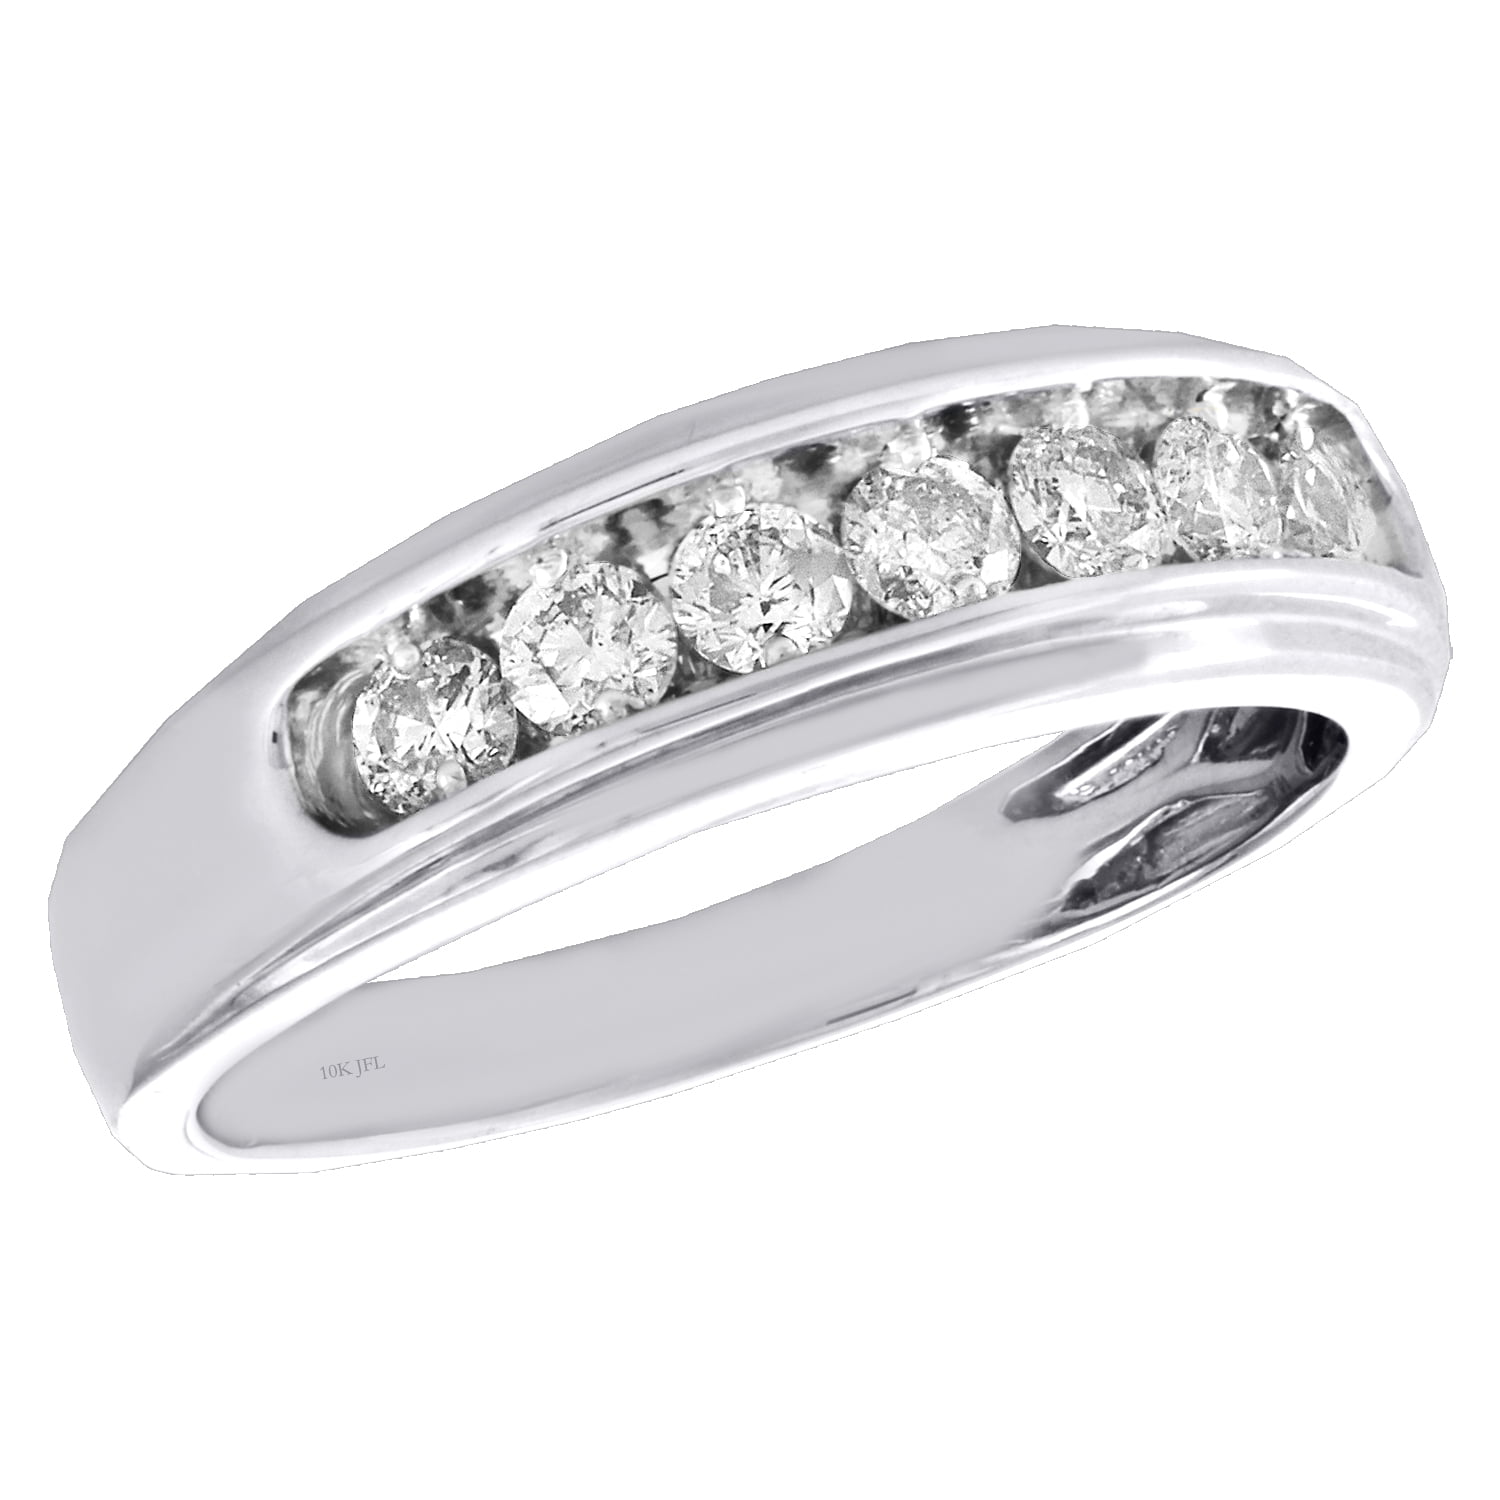 10K Yellow Gold Channel Set Diamond Mens Wedding Band Engagement Ring 0.25 CT.